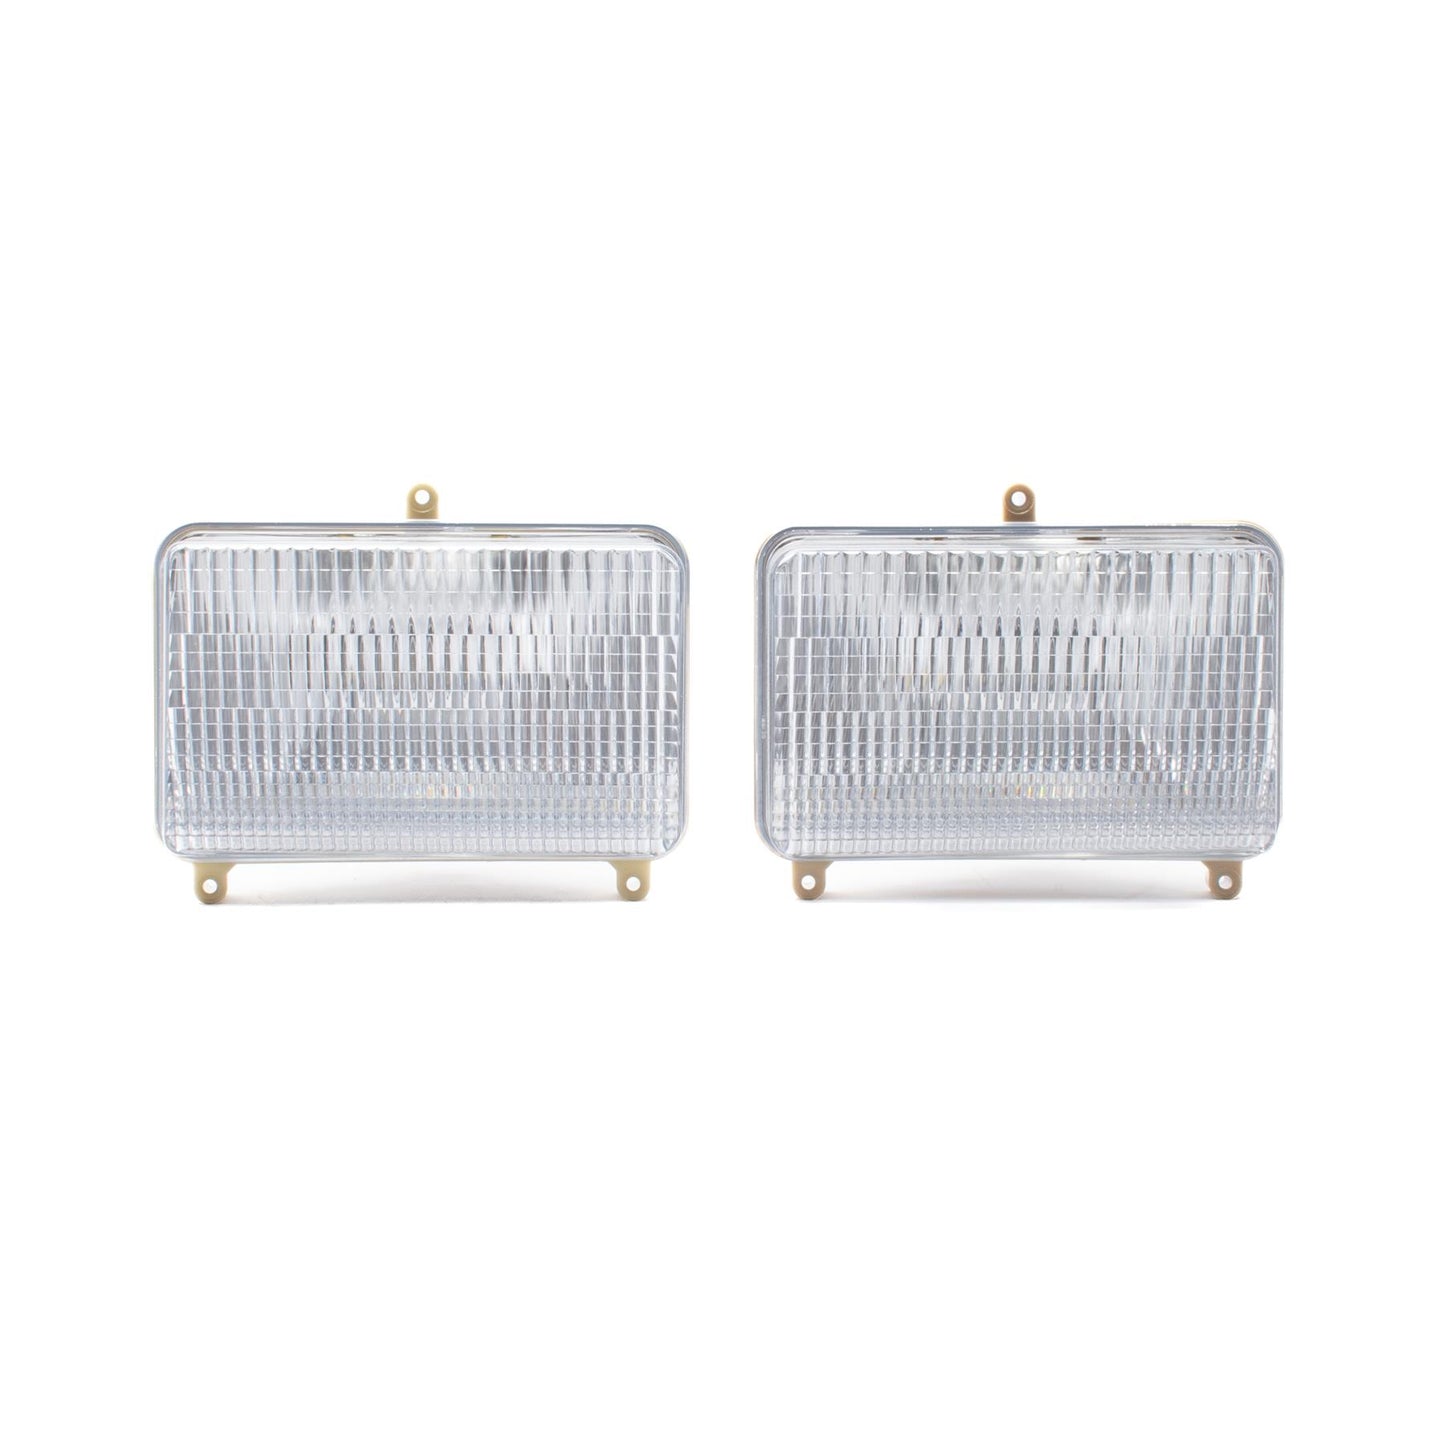 John Deere Headlight Kit - Both Sides - AM120150 AM120151